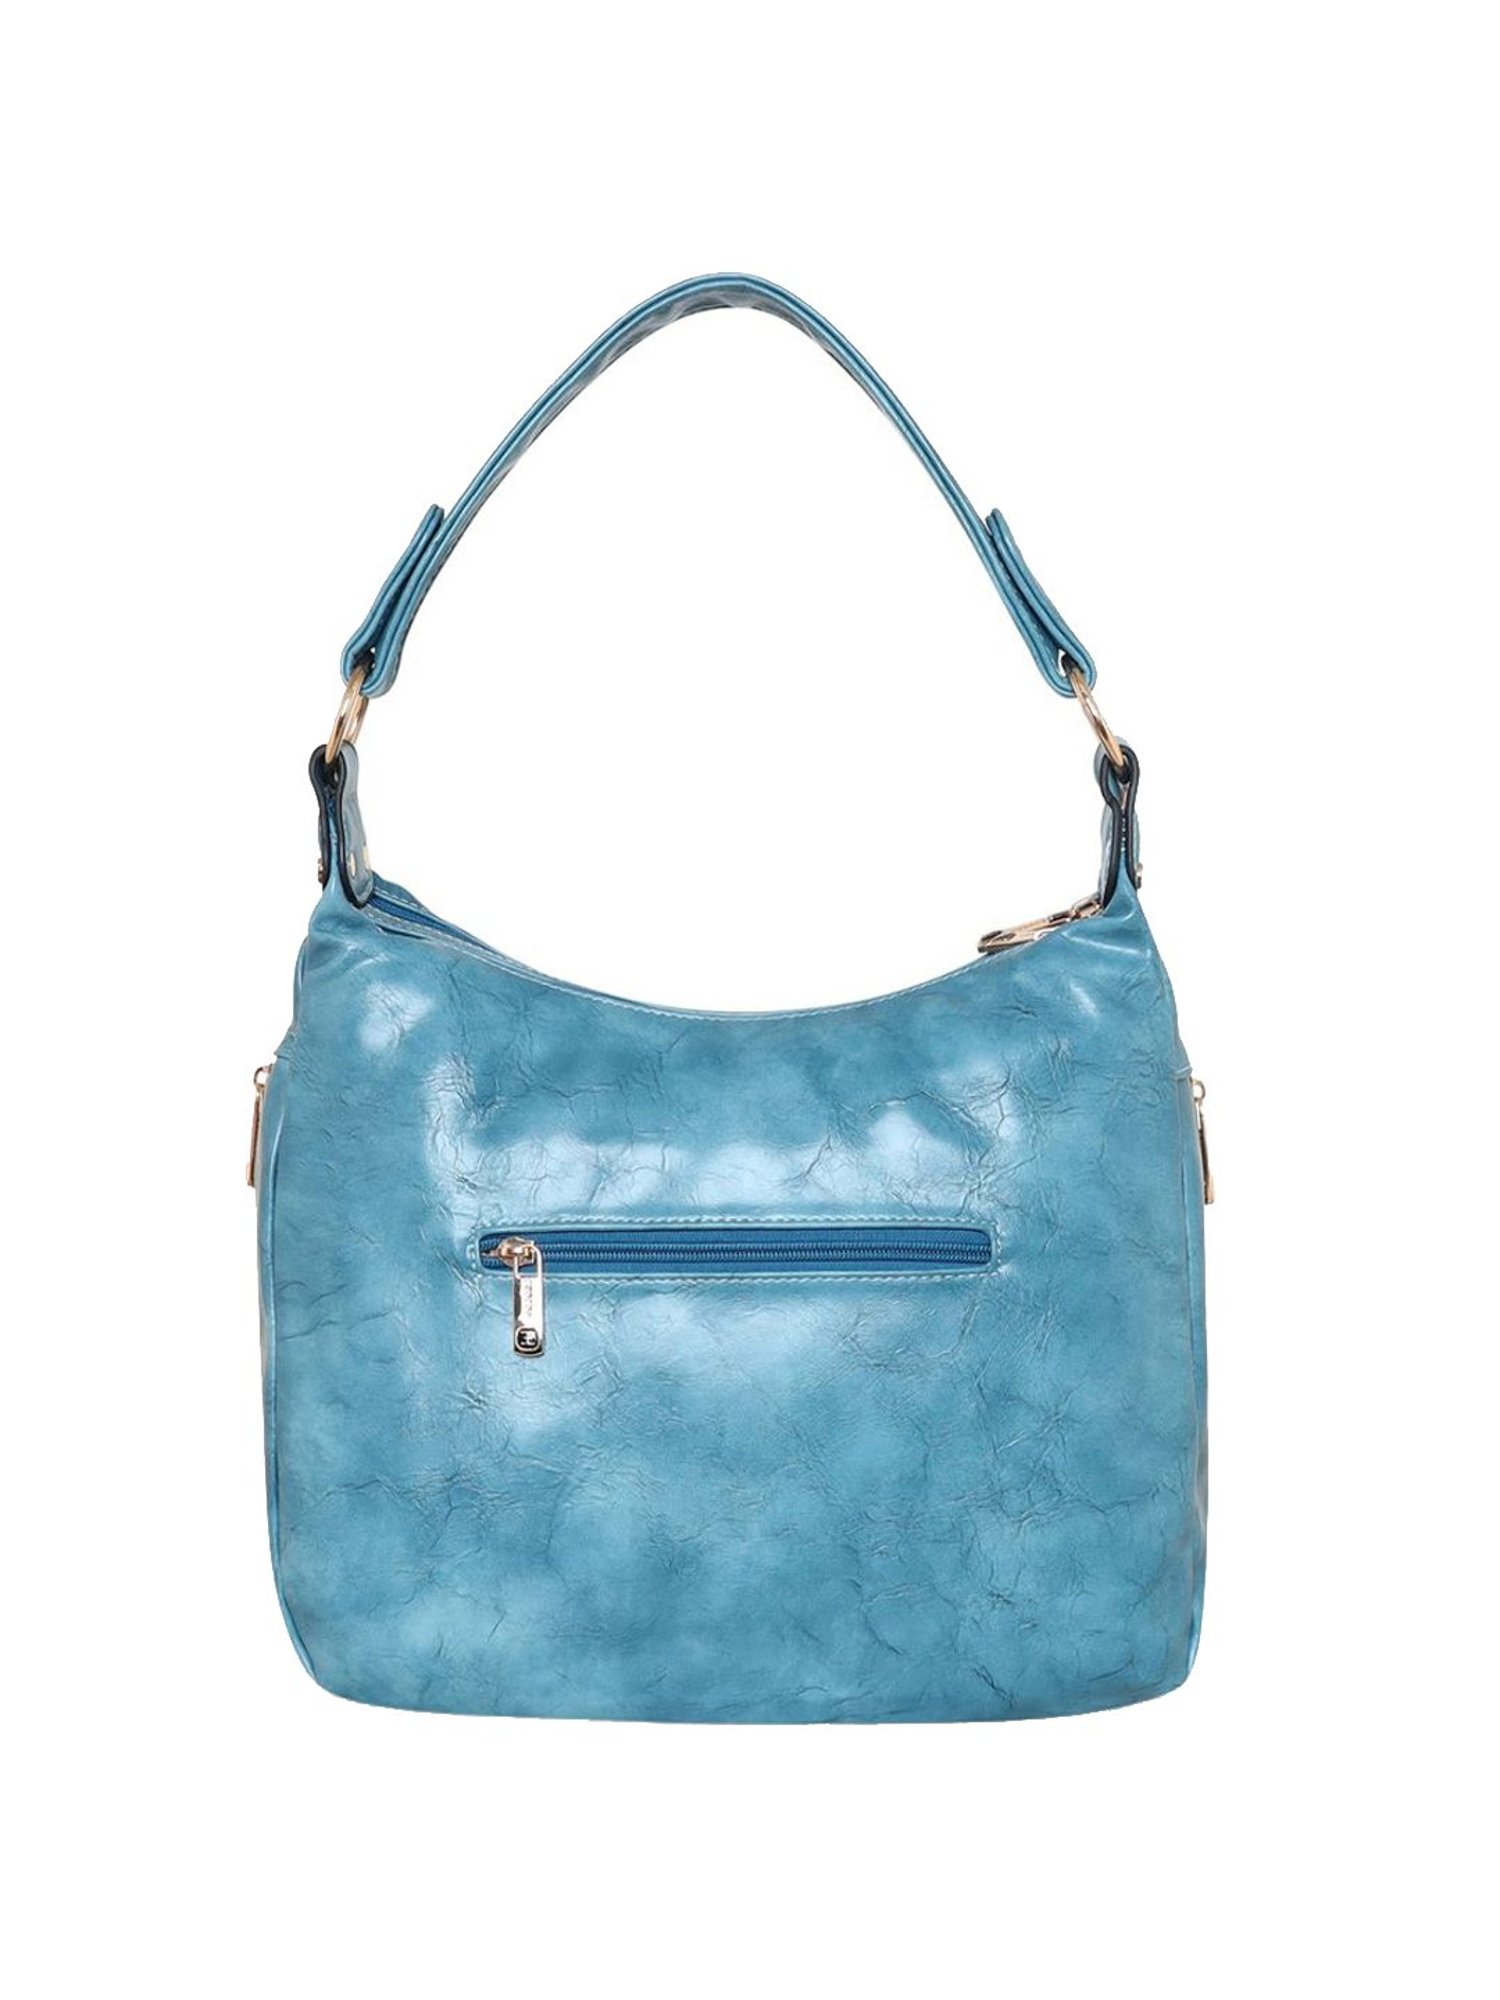 Light blue Hobo bag | Hobo bag, Bags, Hobo